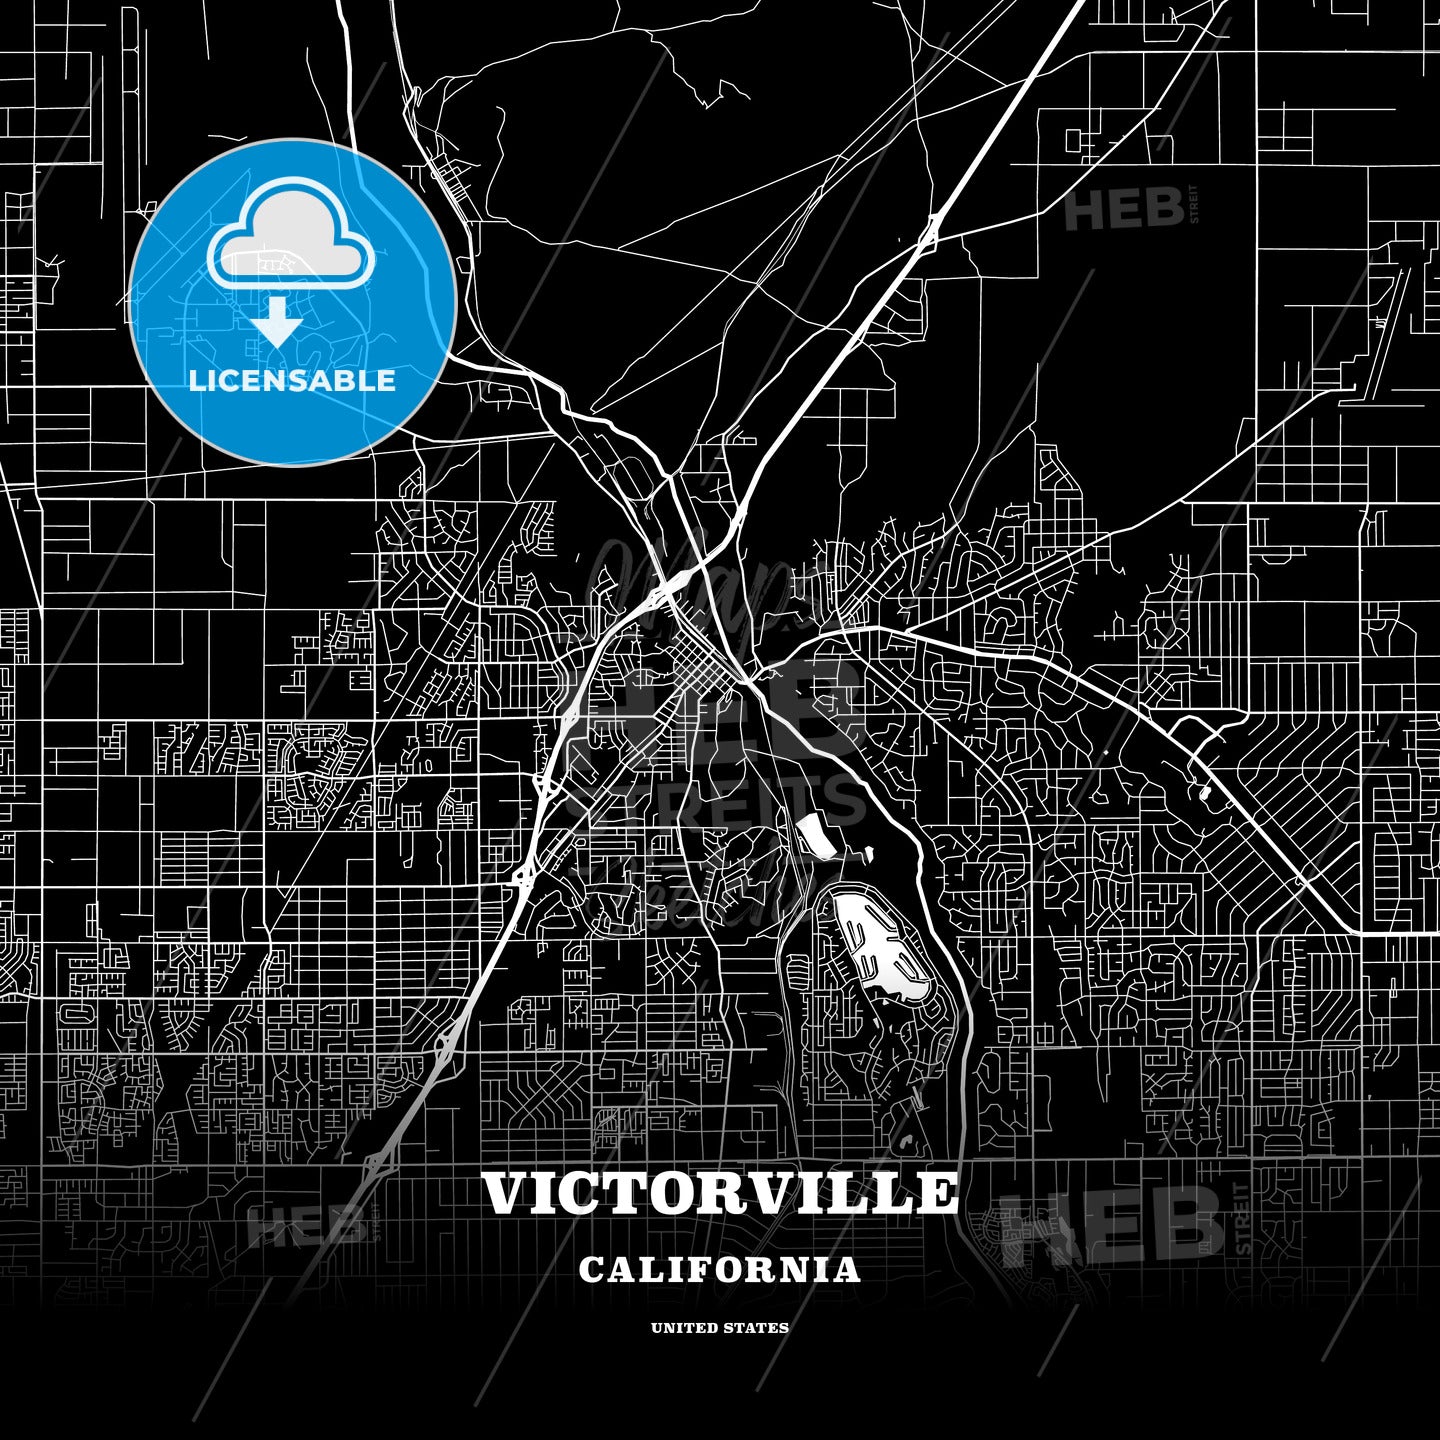 Victorville, California, USA map